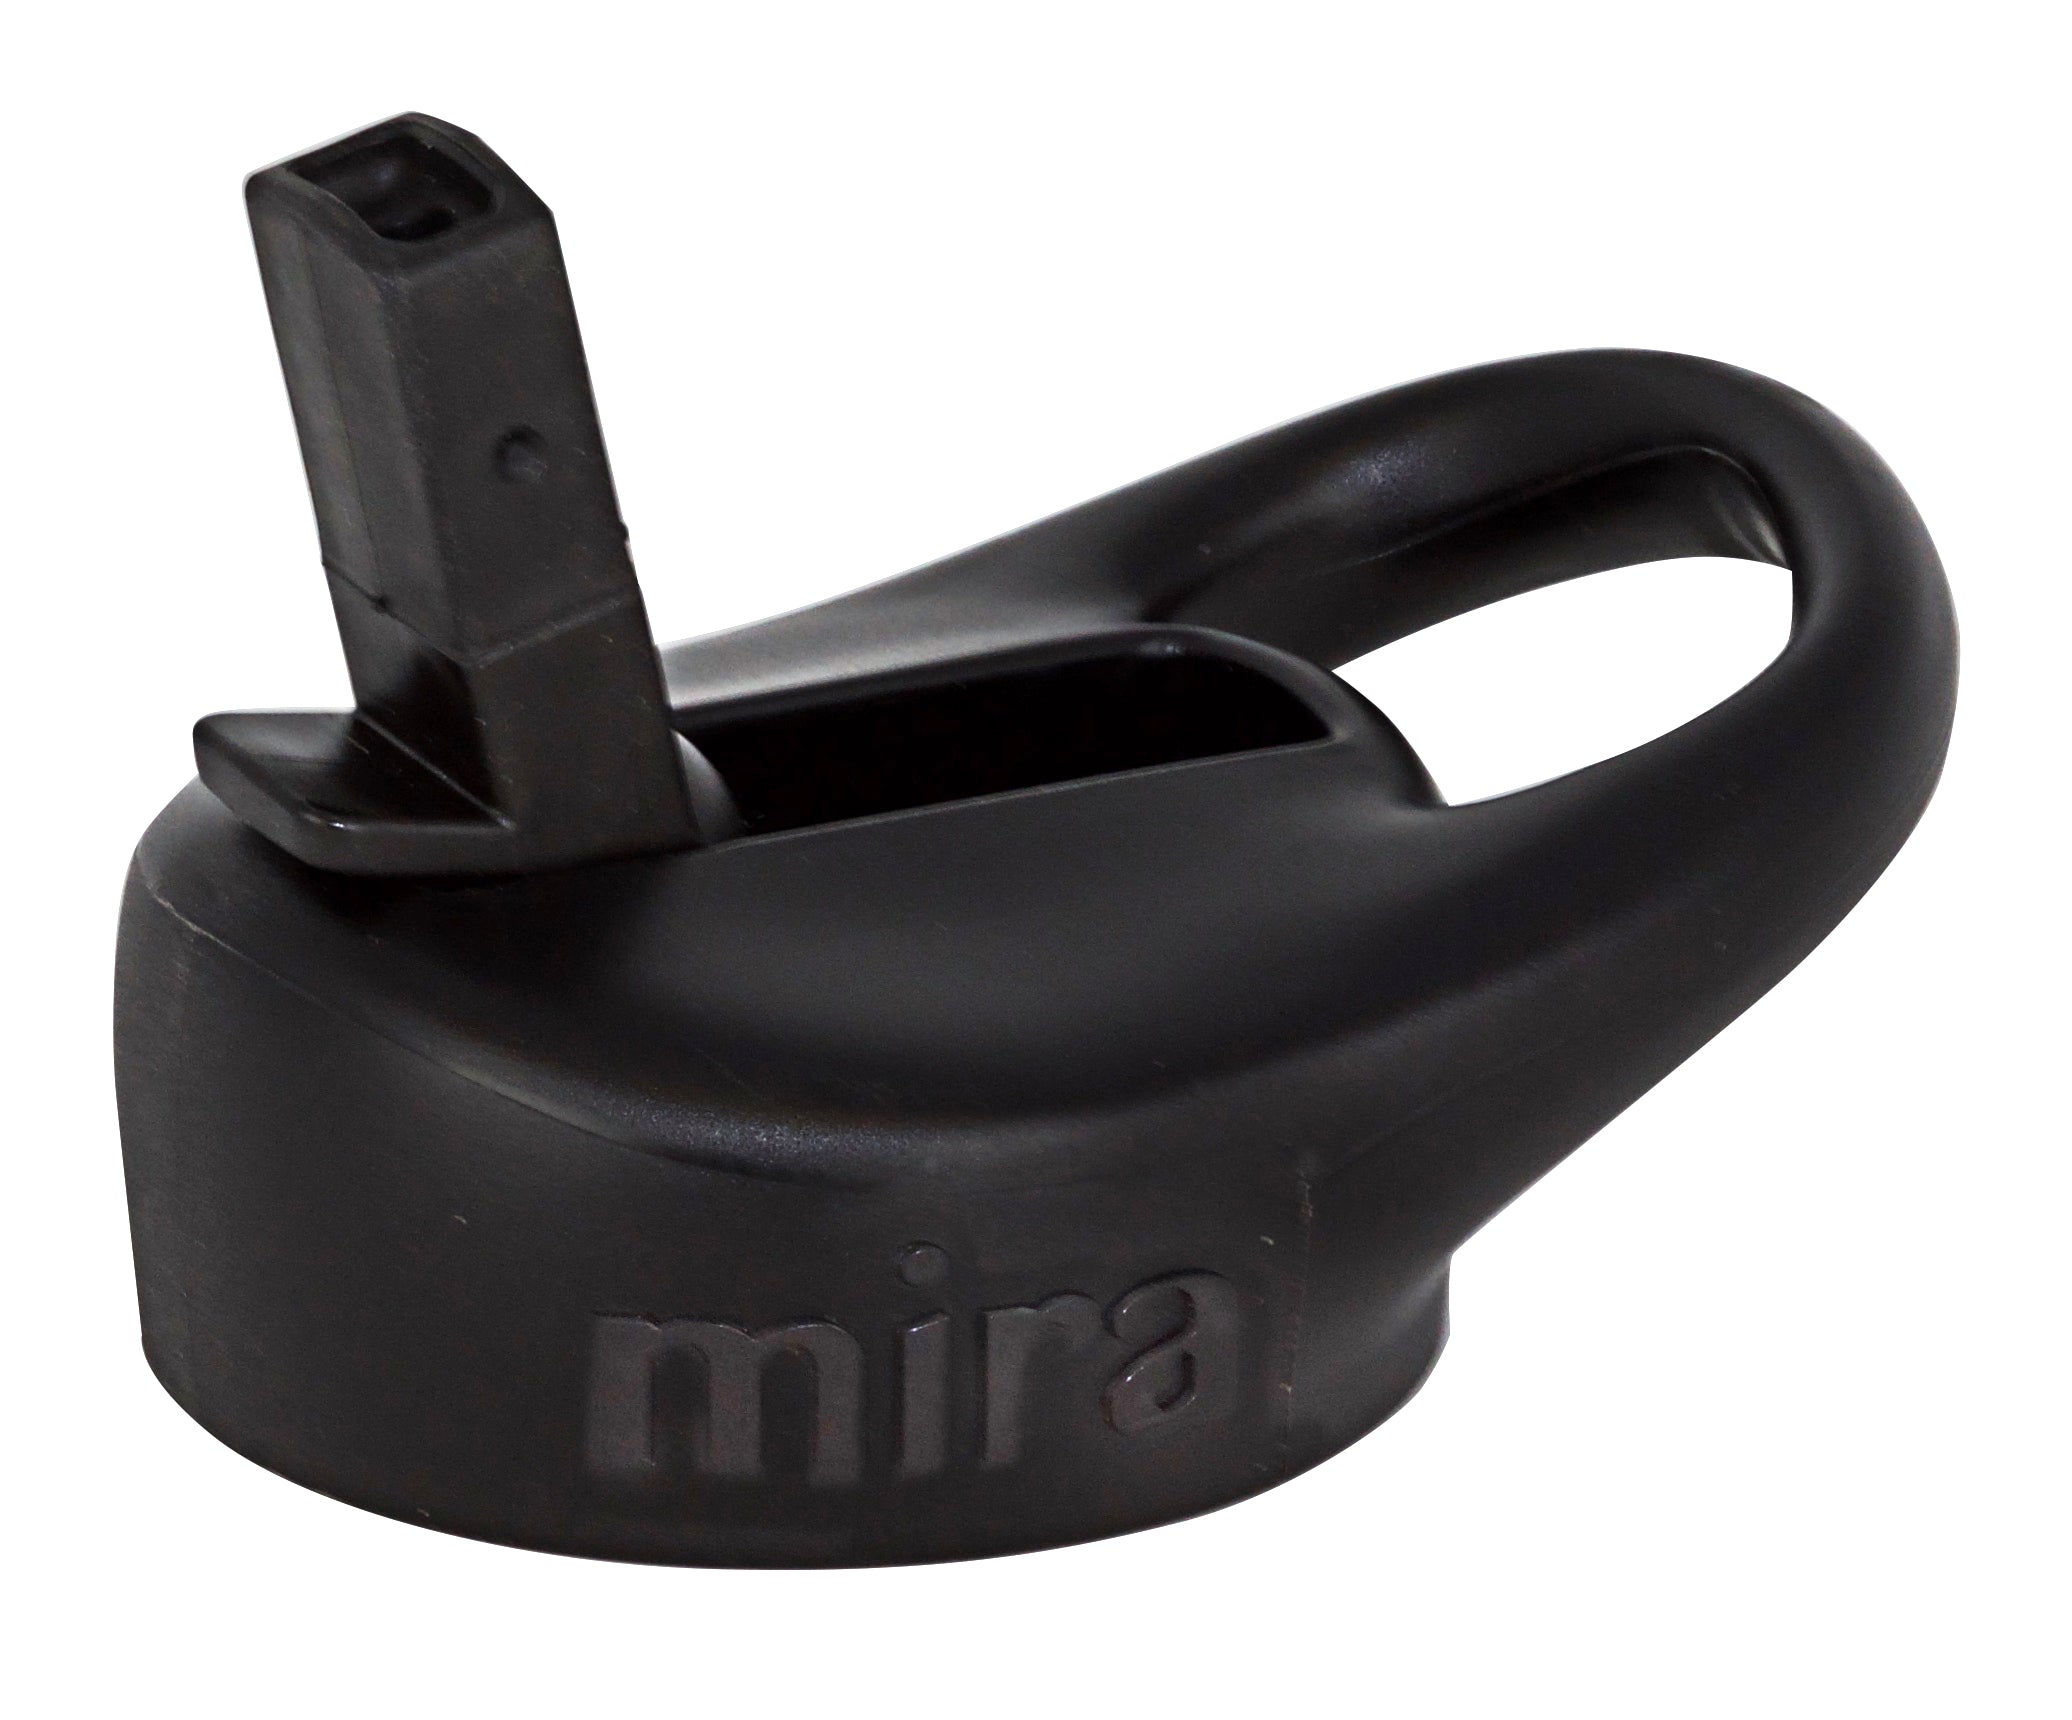 Replacement Lid - Pioneer Mug - 20 oz – MIRA Brands